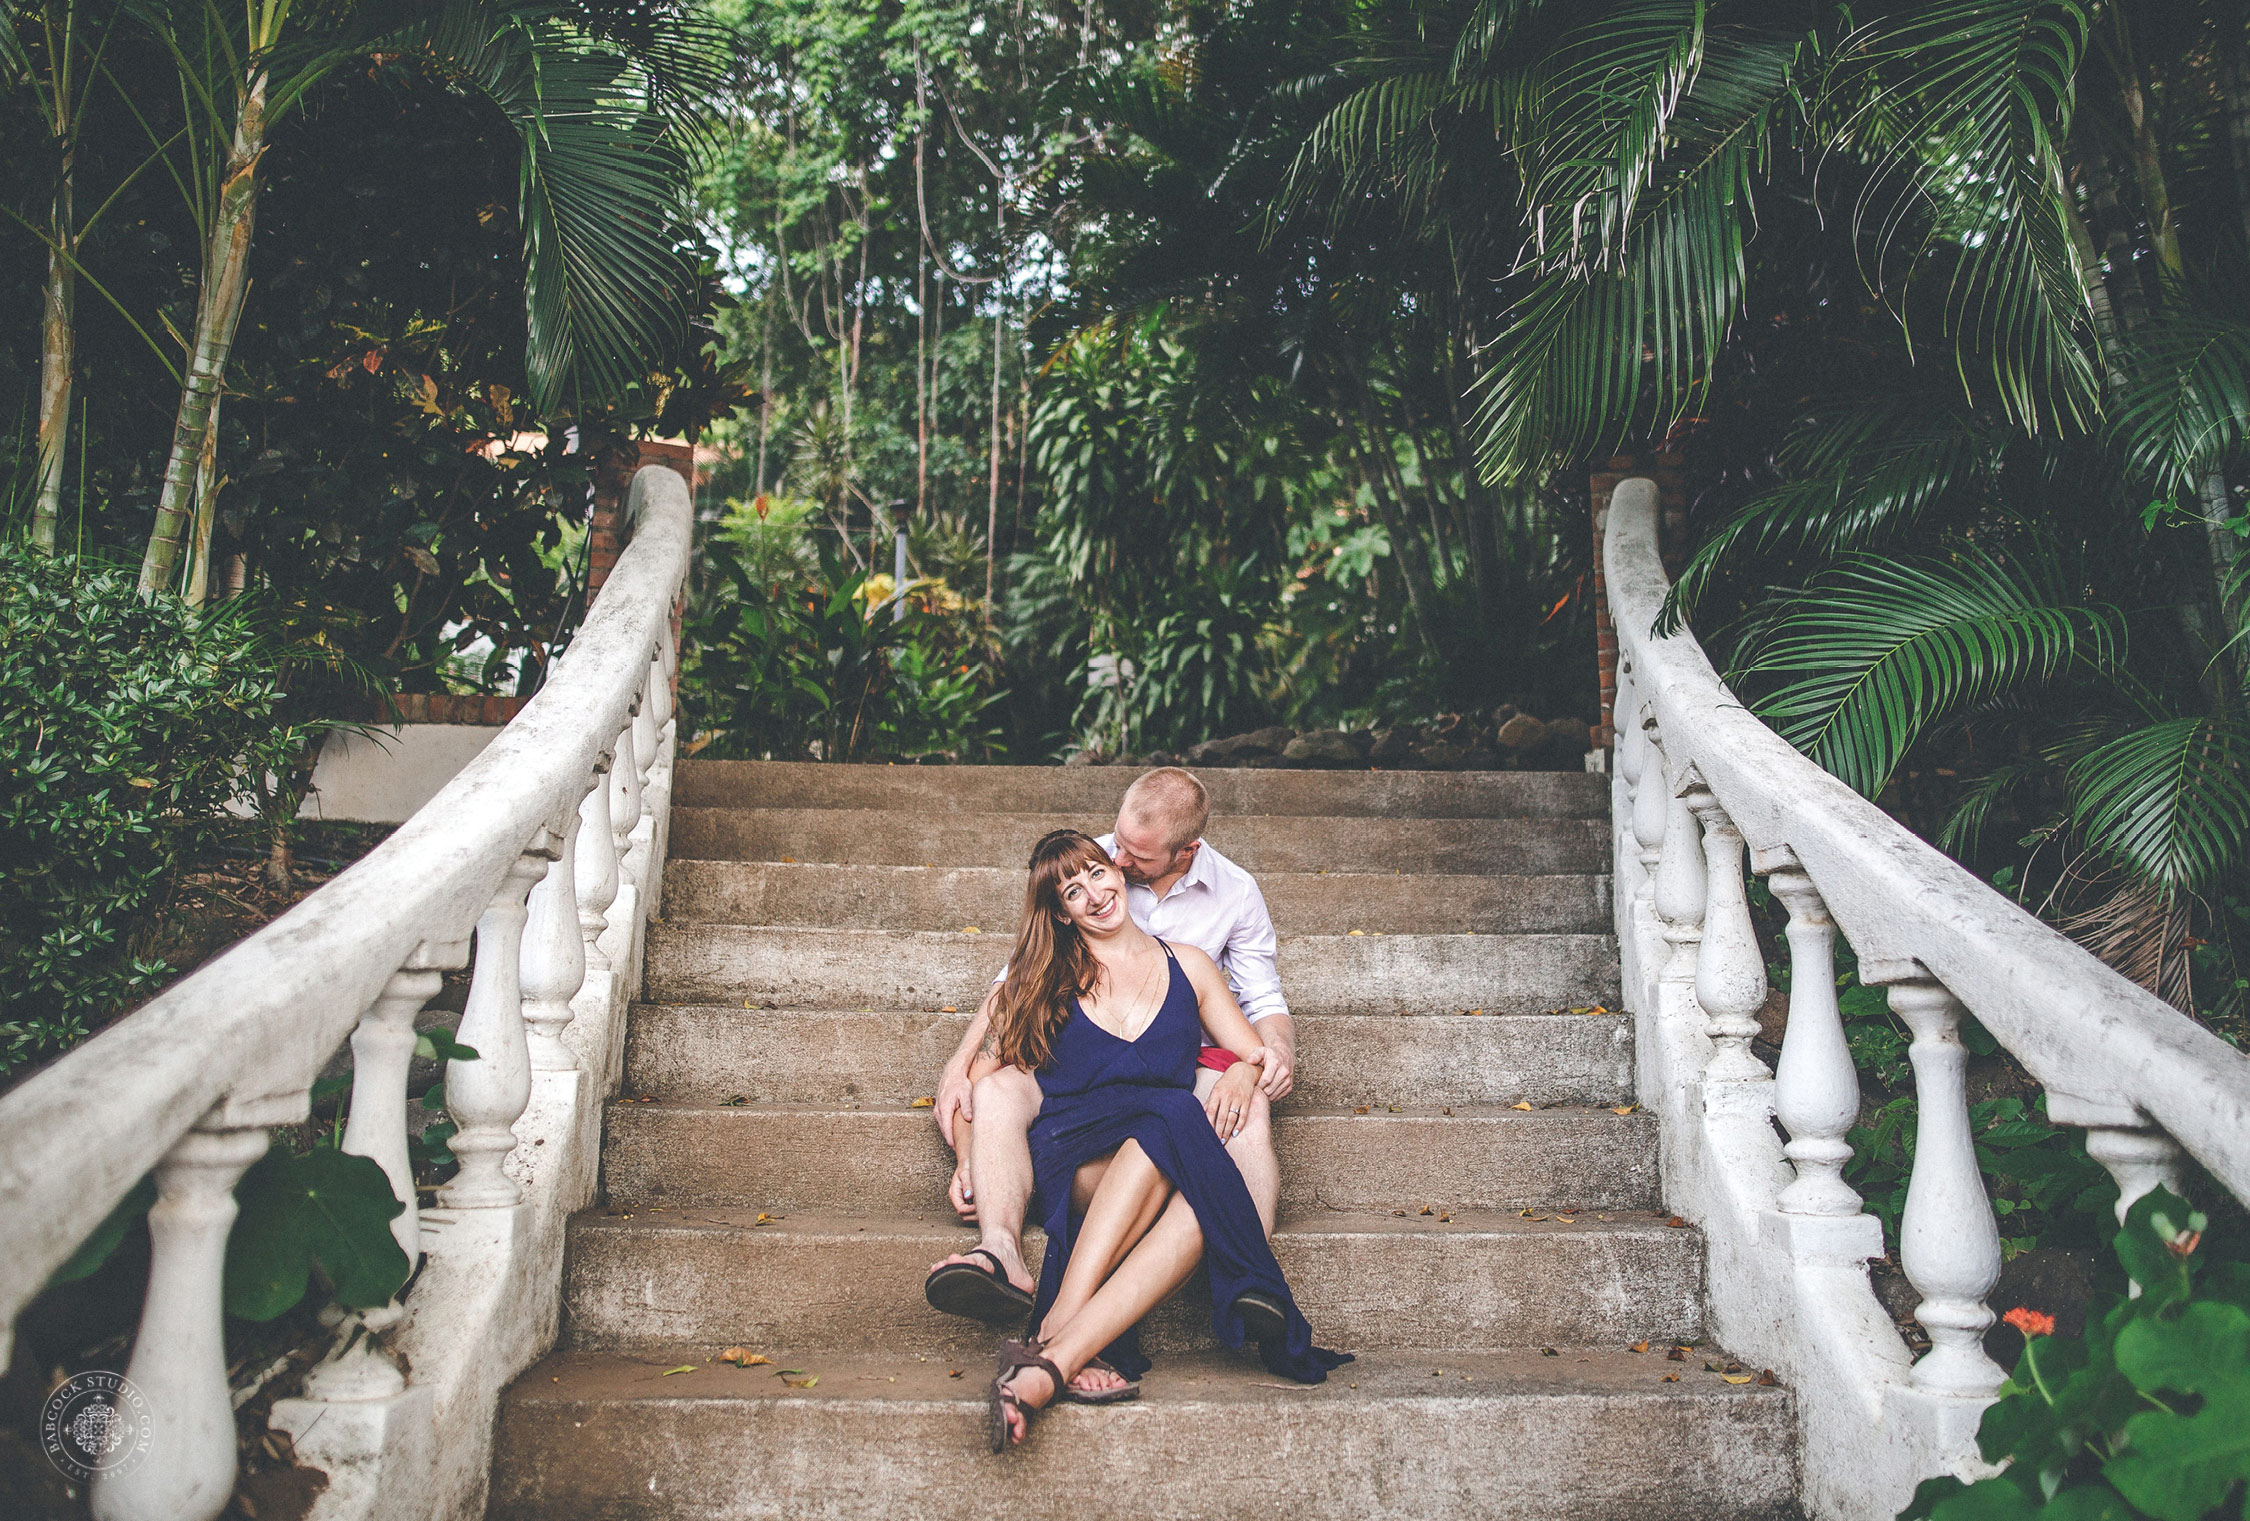 cat-brandon-costa-rica-destination-wedding-photographer-dayton-ohio-4.jpg